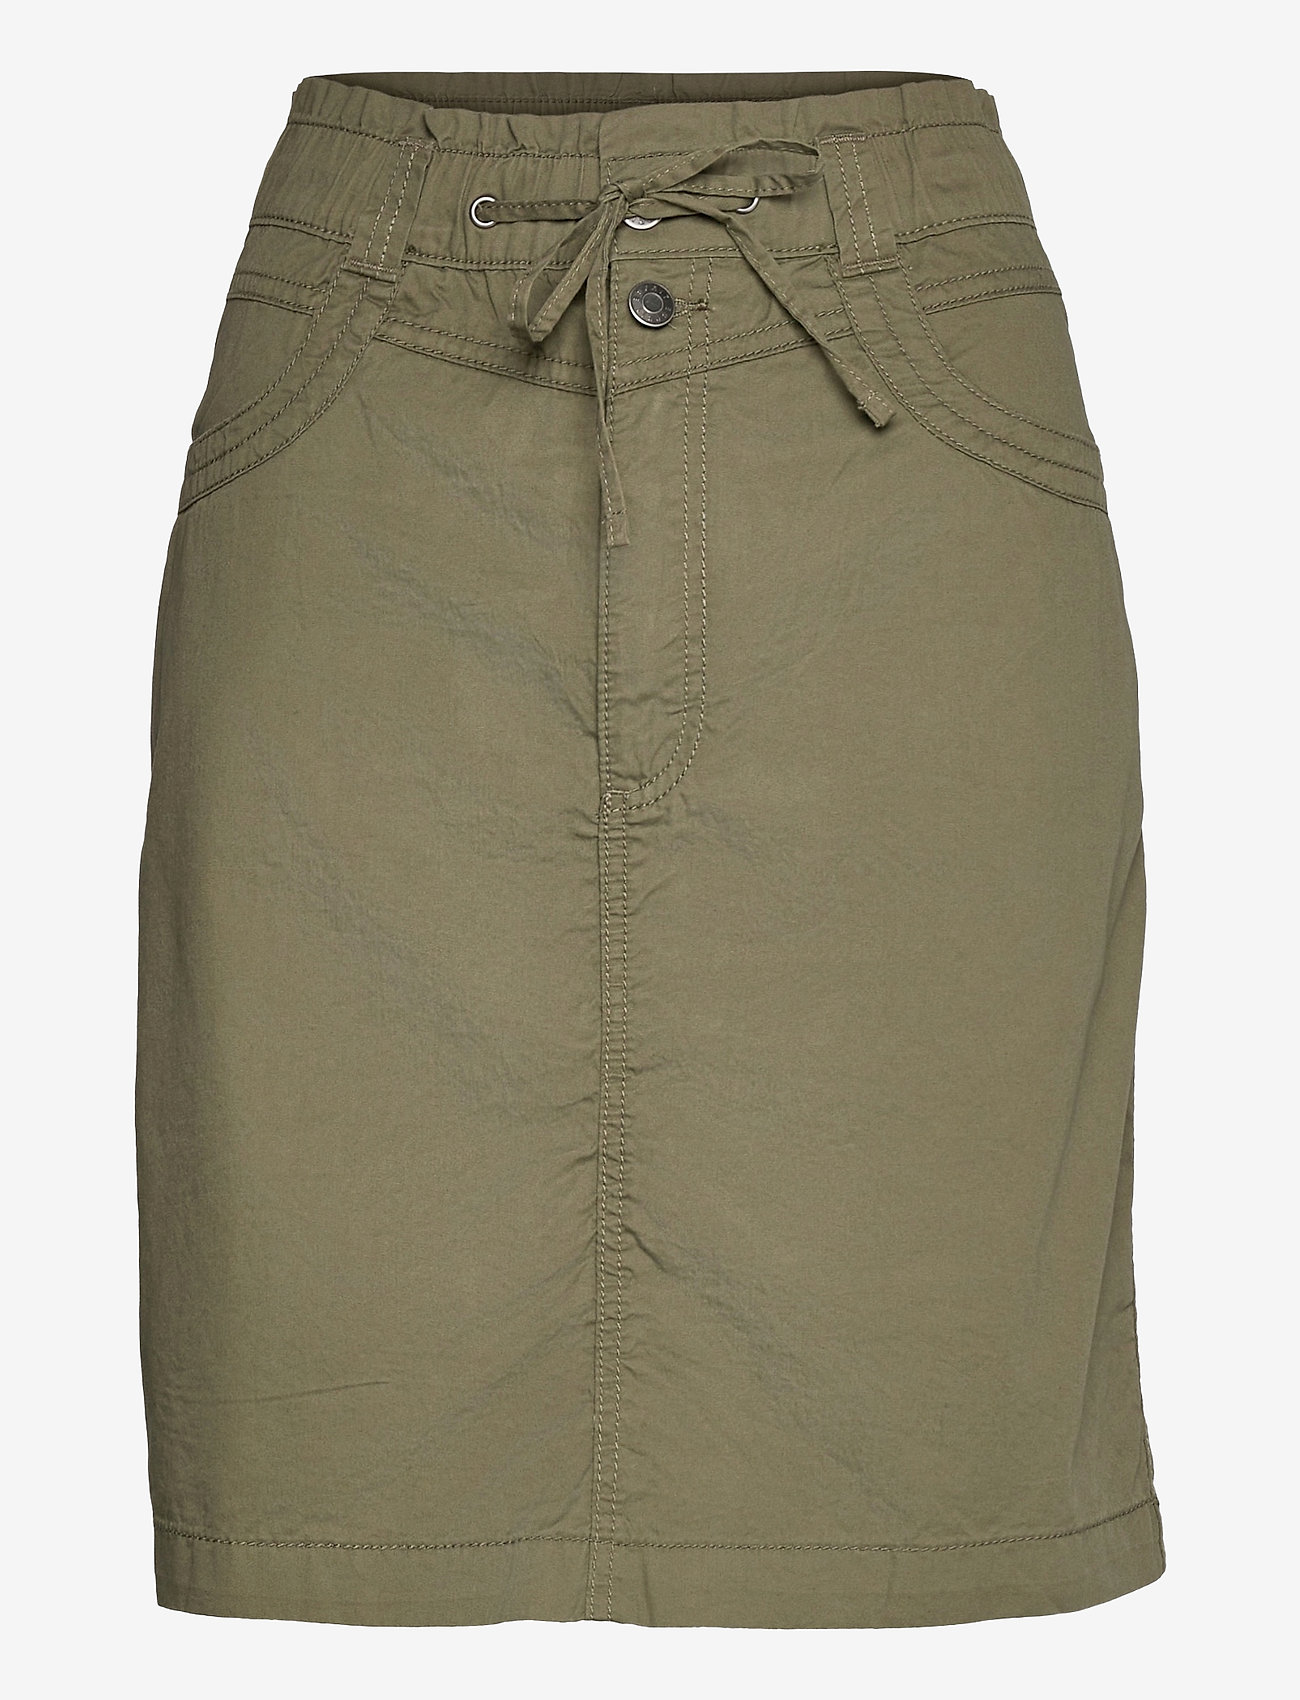 Esprit Casual - PLAY mini skirt made of 100% organic cotton - korta kjolar - khaki green - 0